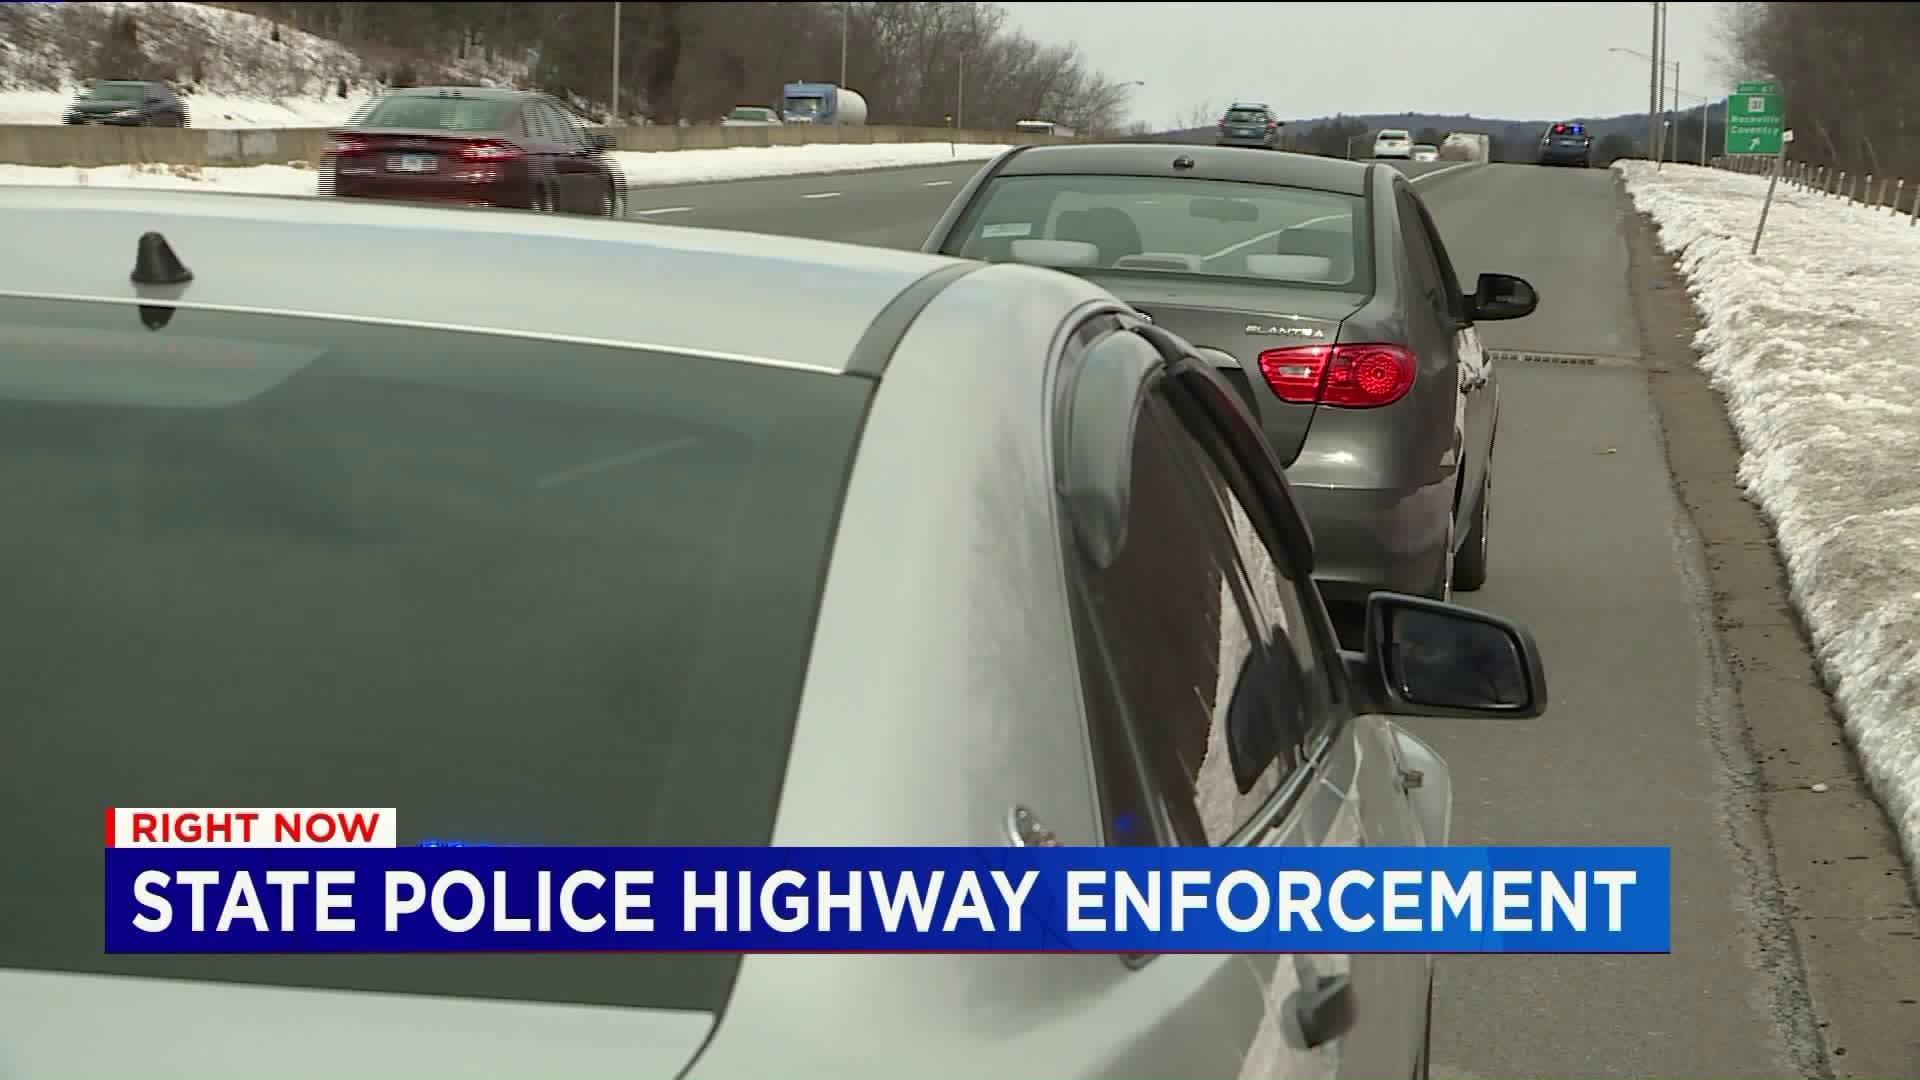 State Police highway enforcement